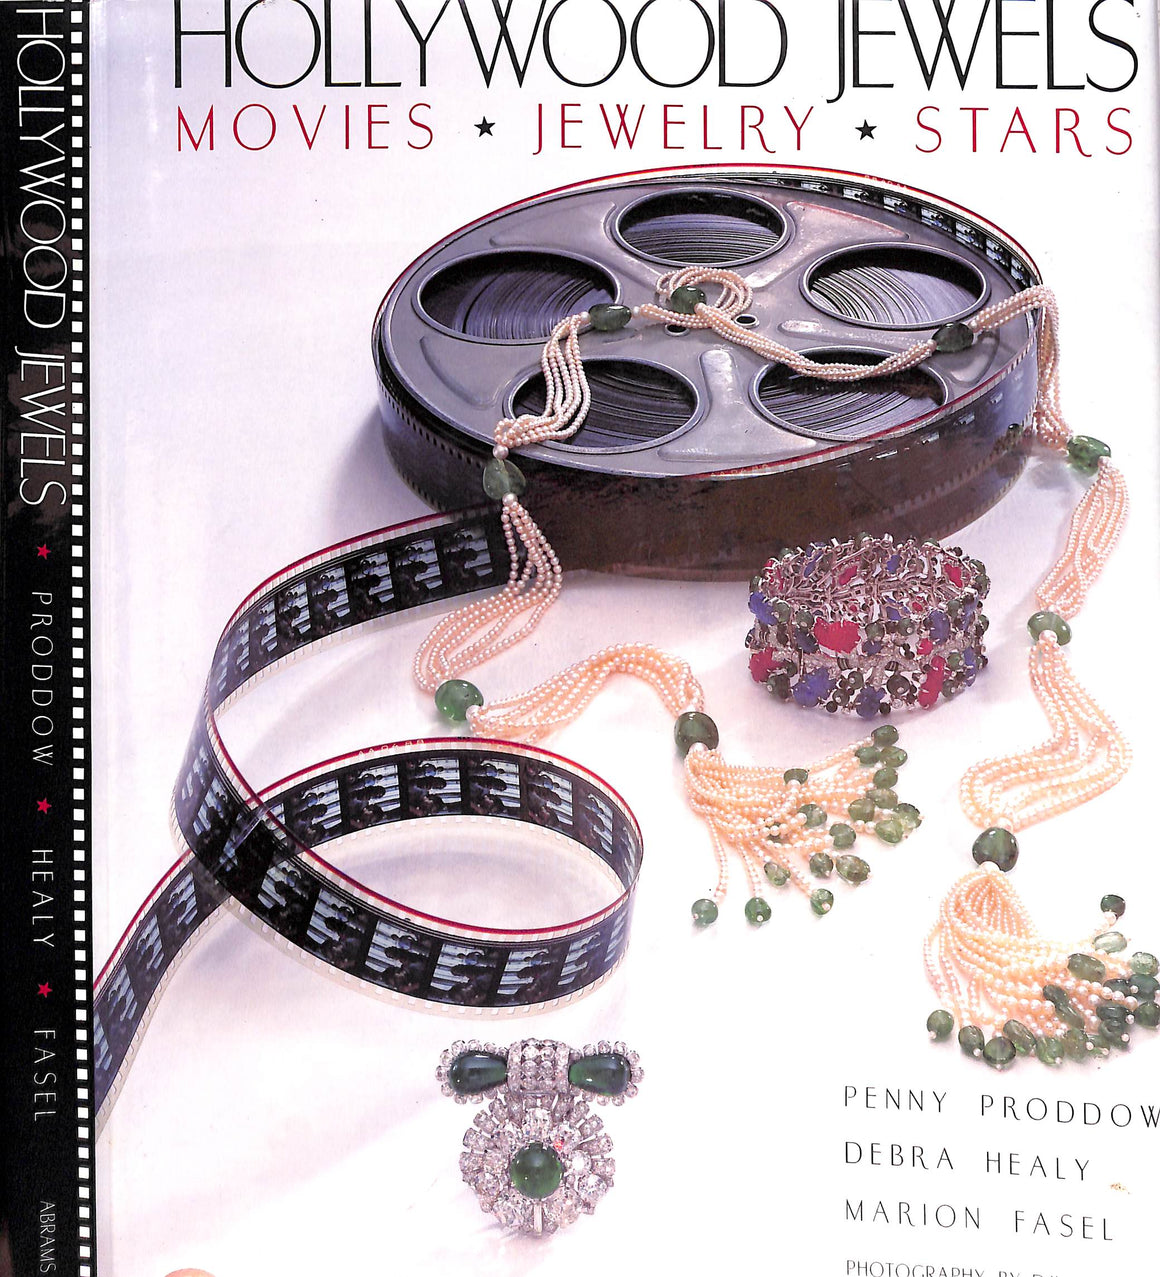 "Hollywood Jewels: Movies, Jewelry, Stars" 1992 PRODDOW, Penny, HEALY, Debra, FASEL, Marion